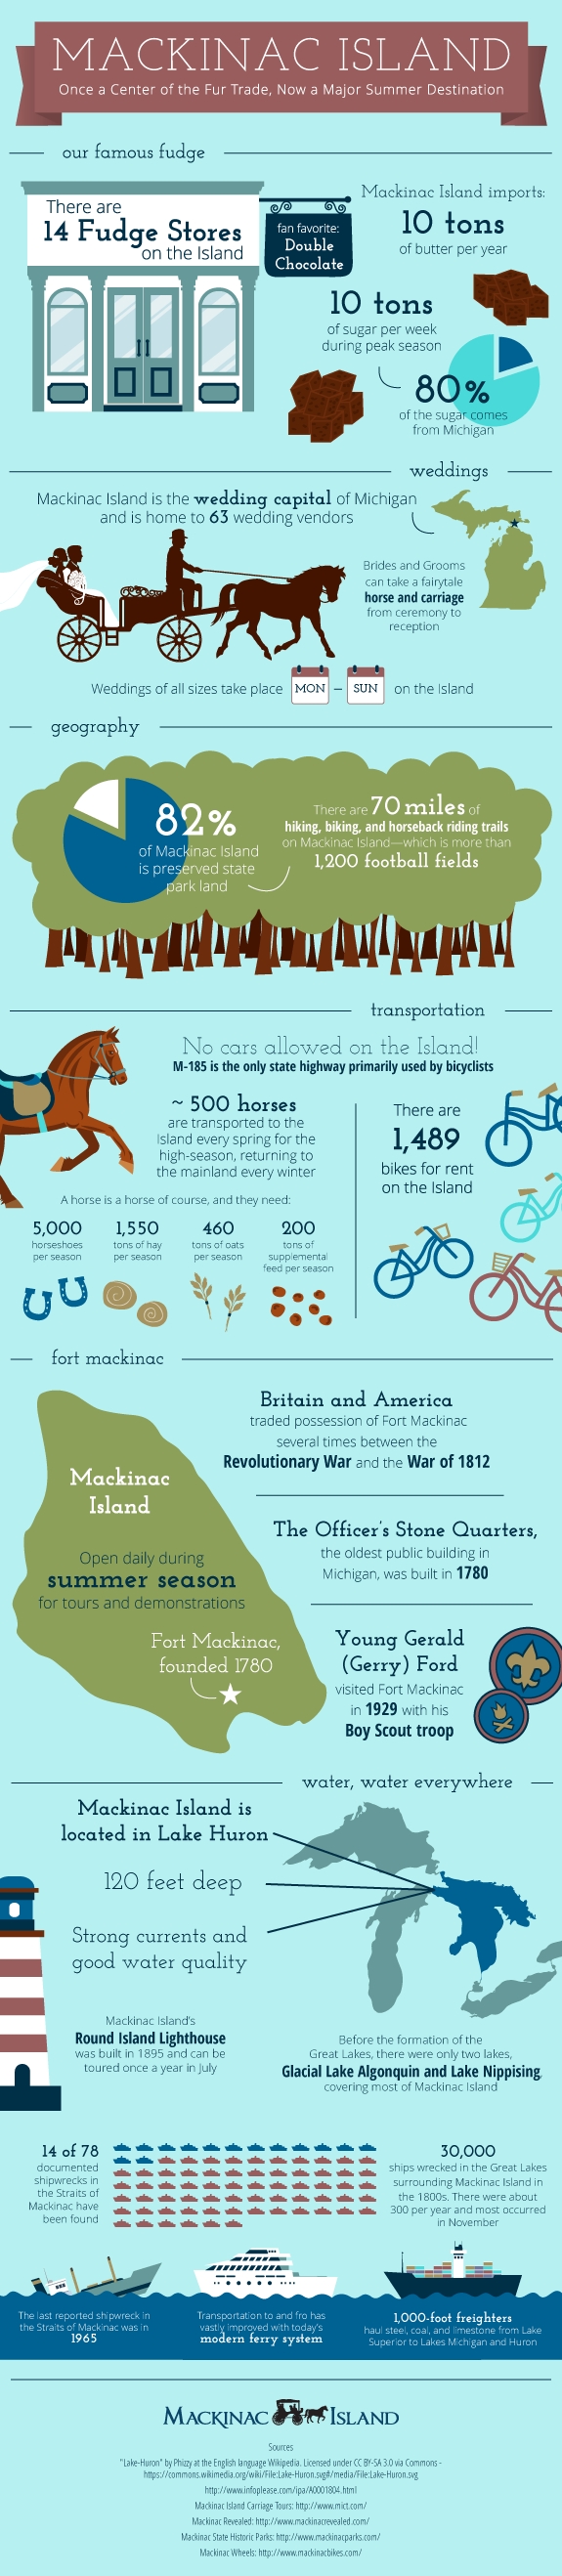 Image Of Infographic For Things To Do At Mackinac Island - Mackinac Island Tourism Bureau